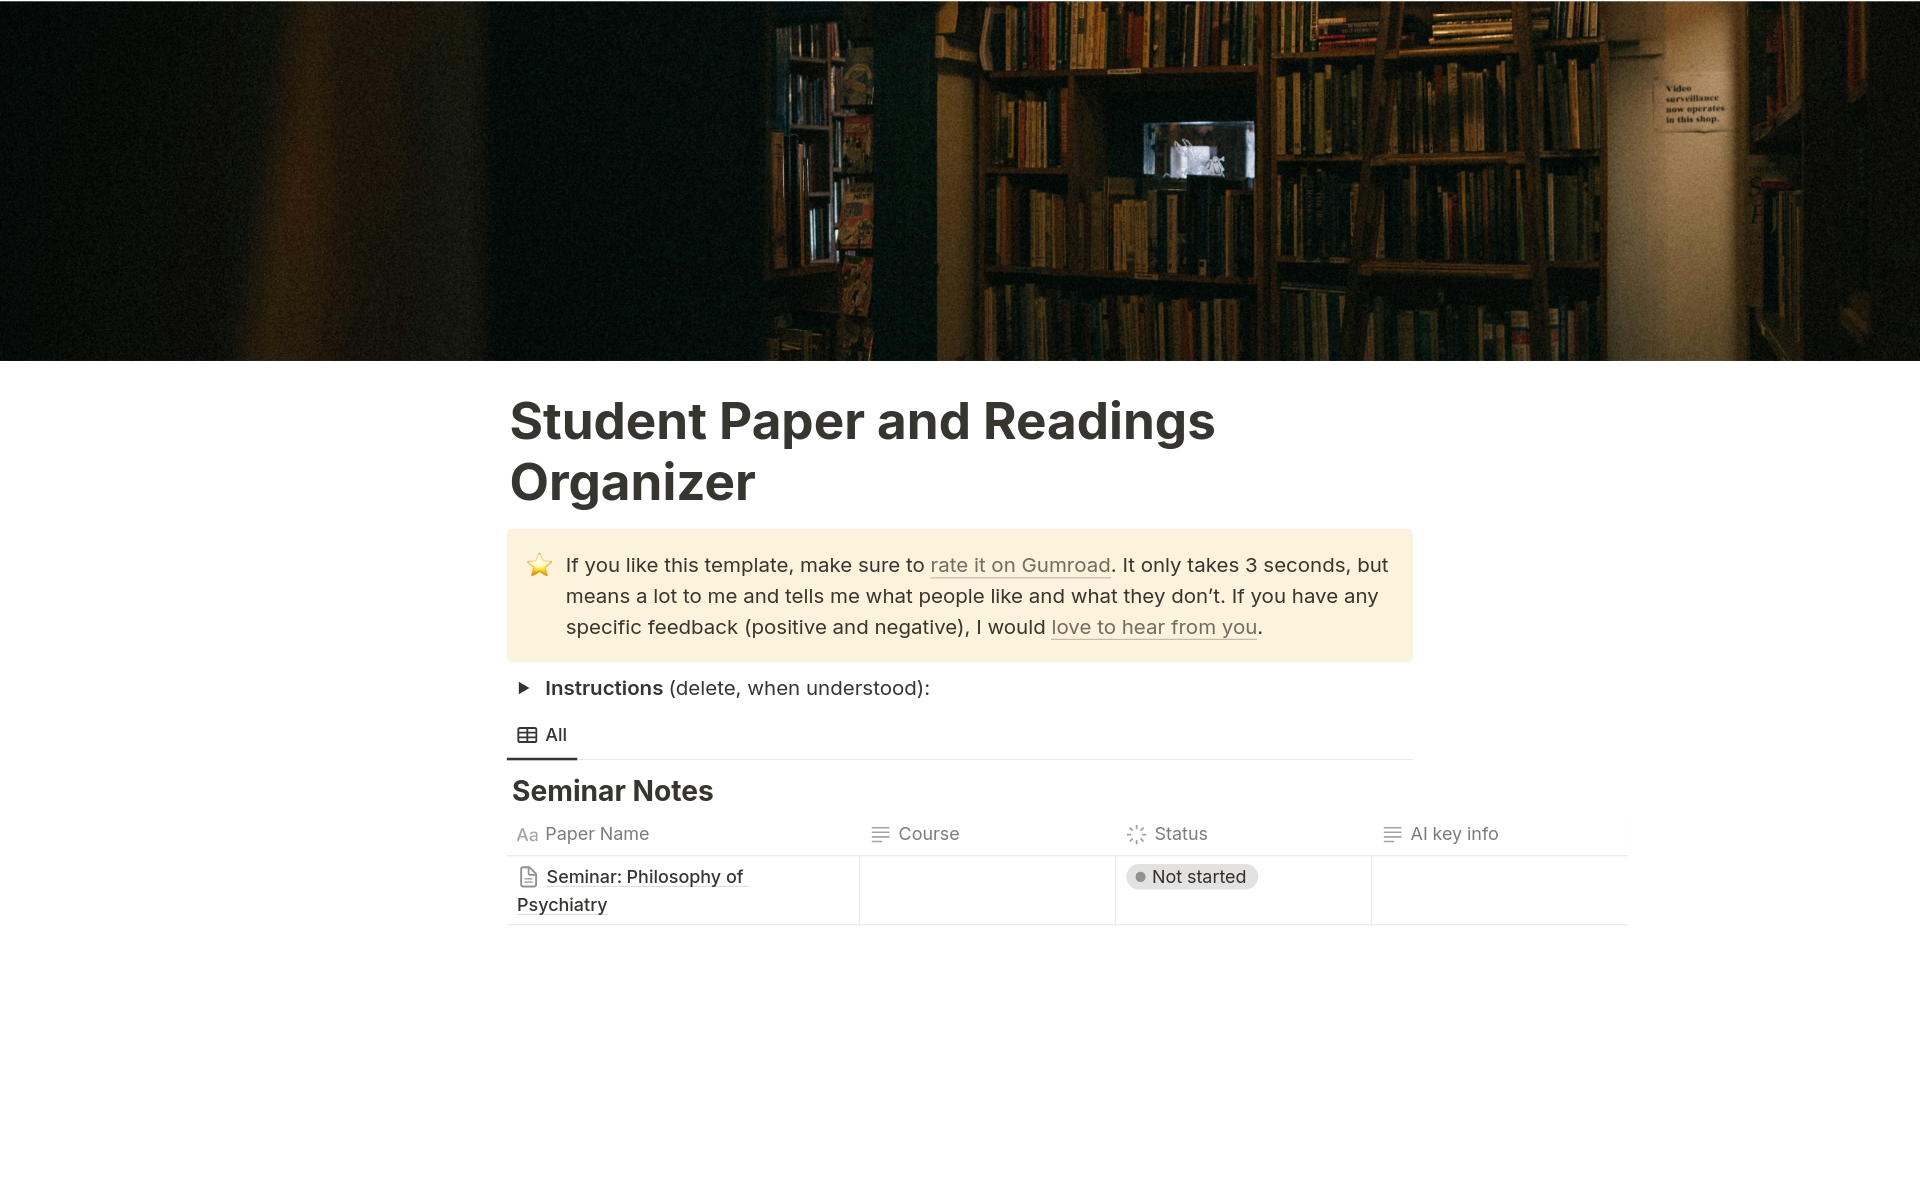 Vista previa de una plantilla para Student Paper and Readings Organizer